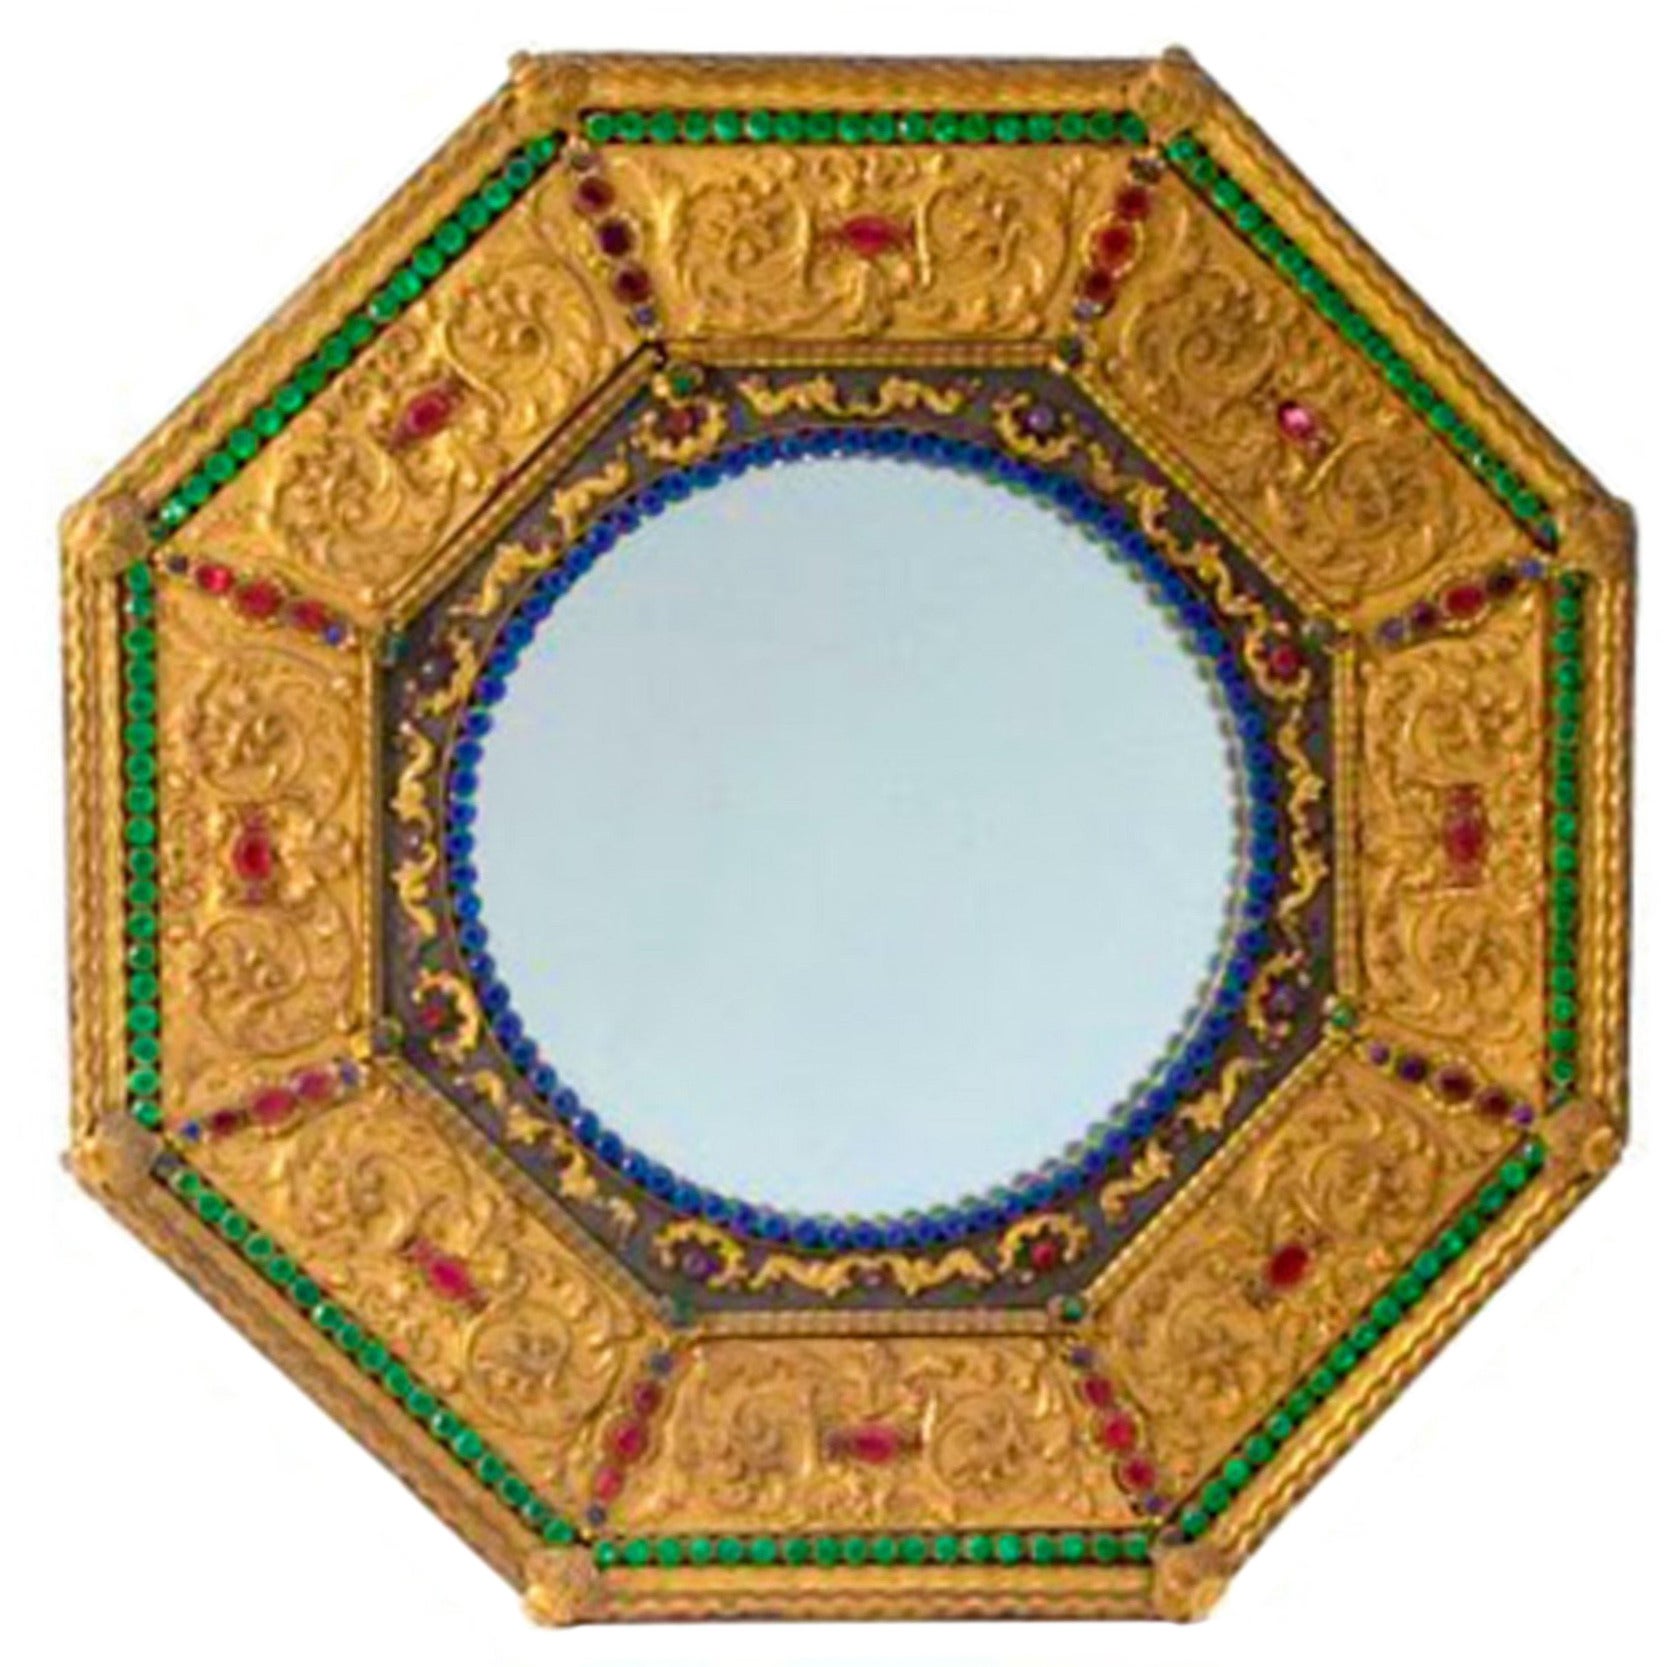 Early Renaissance Revival Octagonal Jeweled Mirror